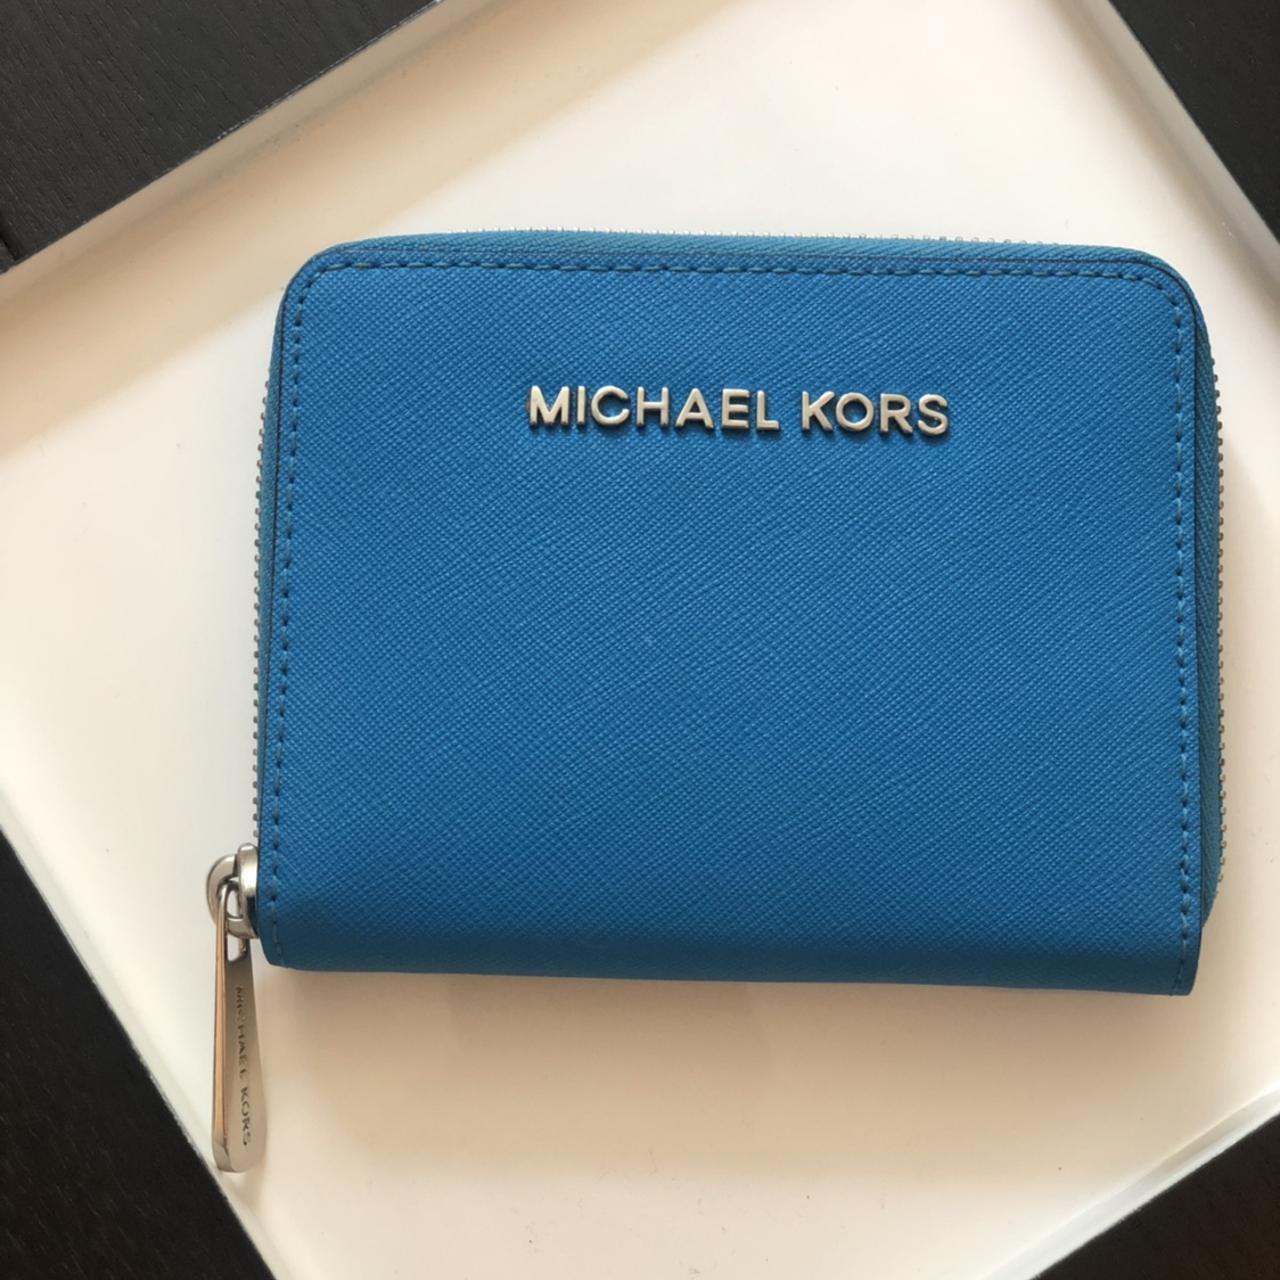 MICHAEL KORS NEOT CLUTCH ROYAL BLUE LEATHER BUCKLE CLUTCH BAG MULTIPLAY  POCKET | eBay